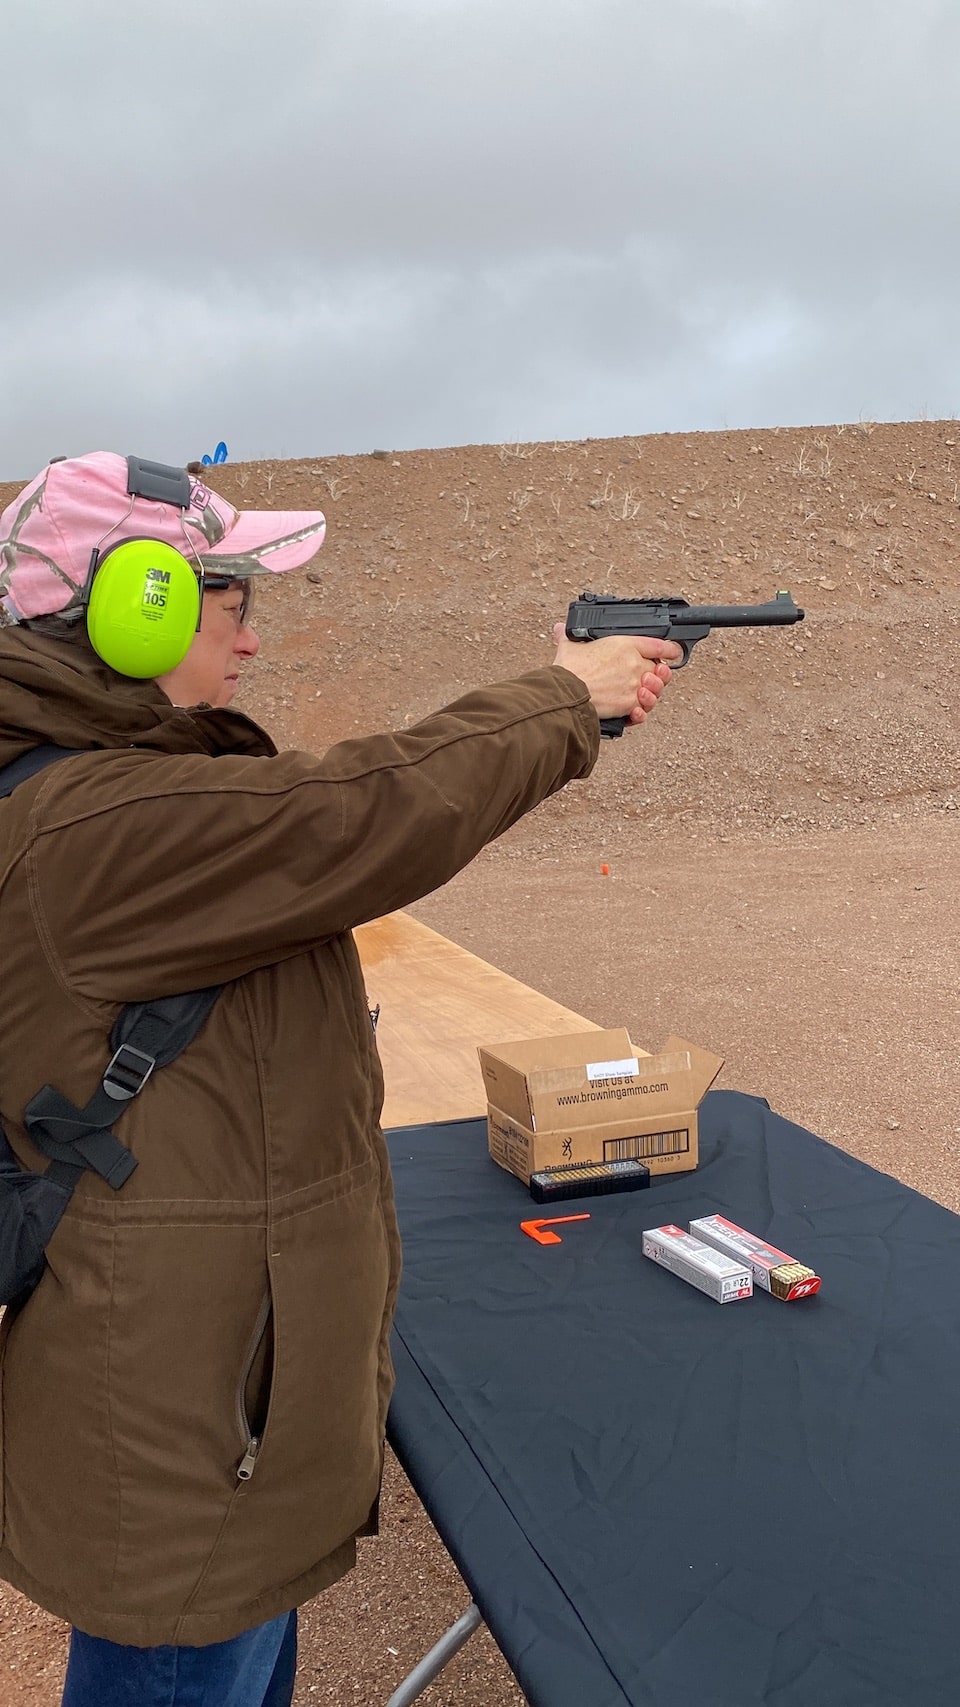 Nancy Keaton Trying New 22 Ammo (Becky Yackley Photo)

TaurusTX 22 Compact